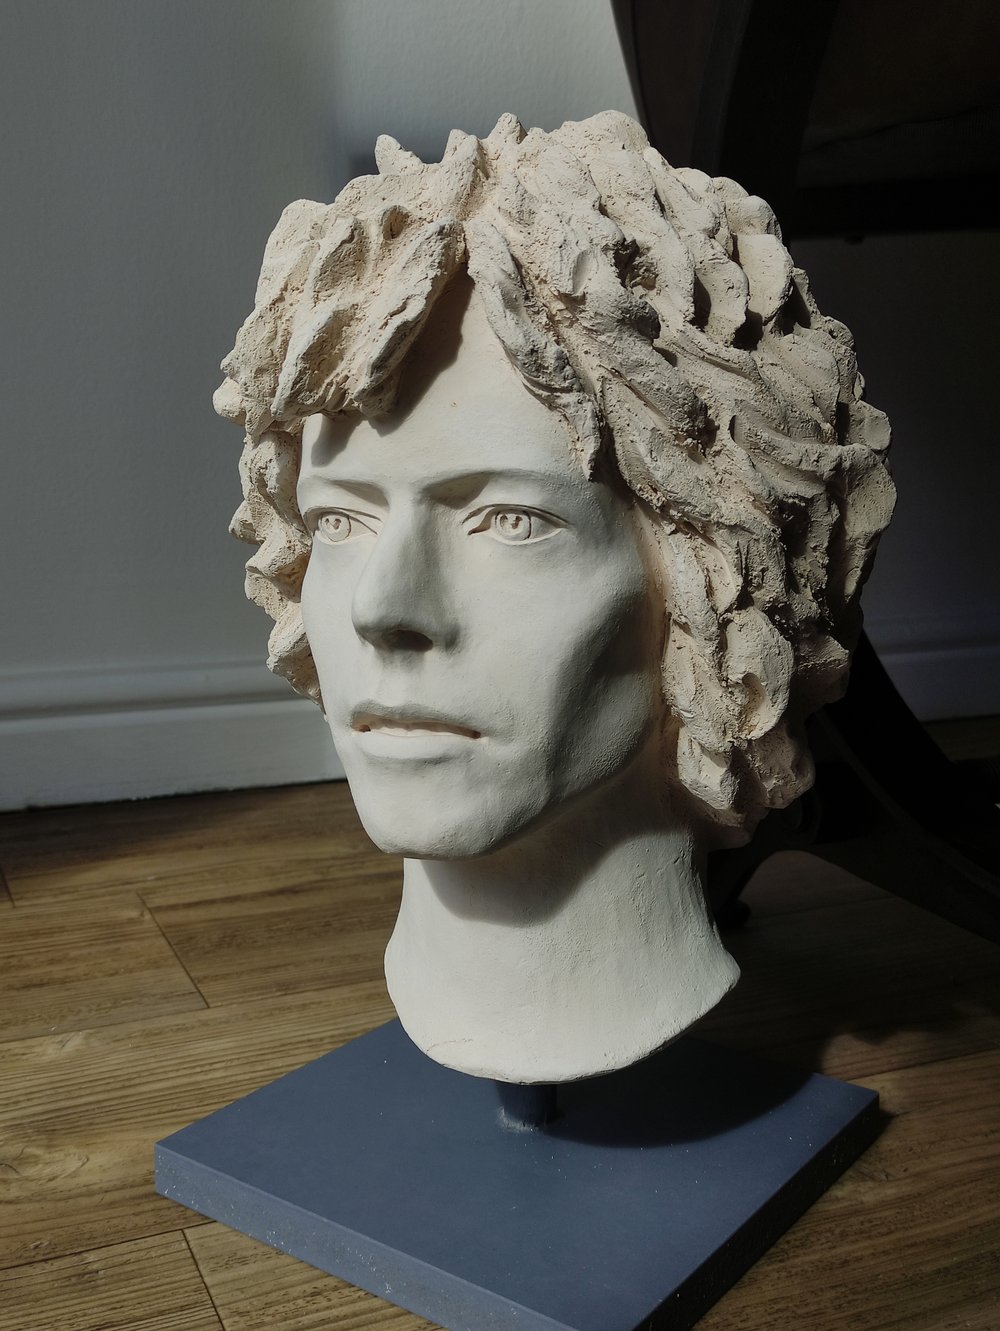 *SALE* 'Space Oddity' Full Head Sculpture - White Terracotta